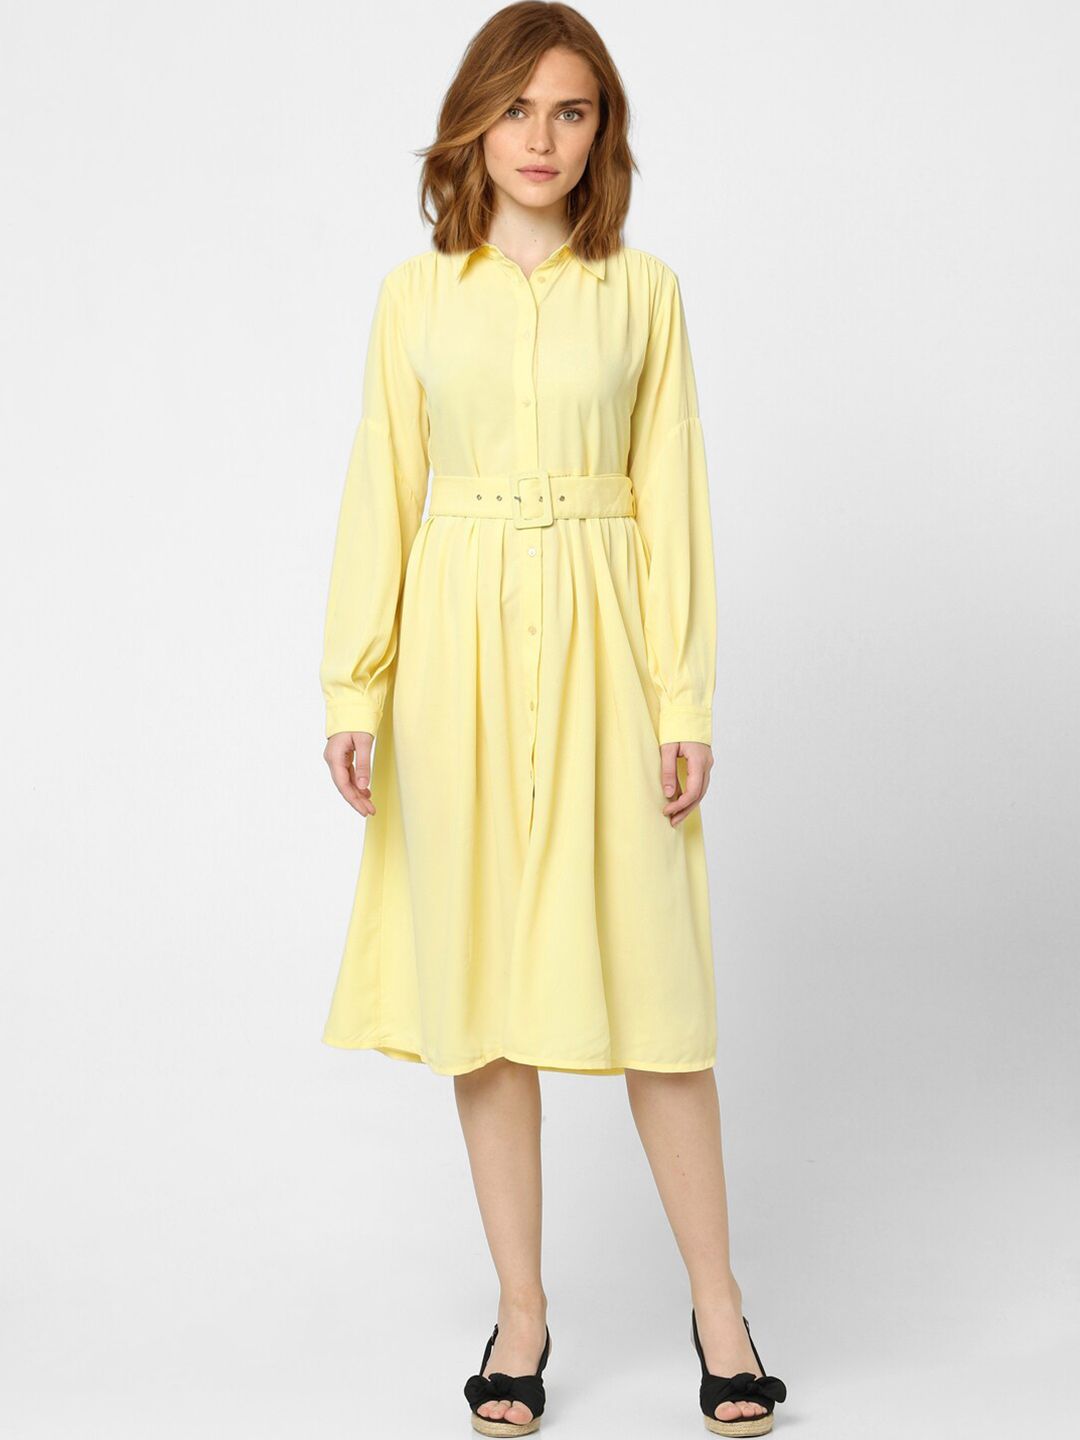 Vero Moda Yellow Midi Dress Price in India